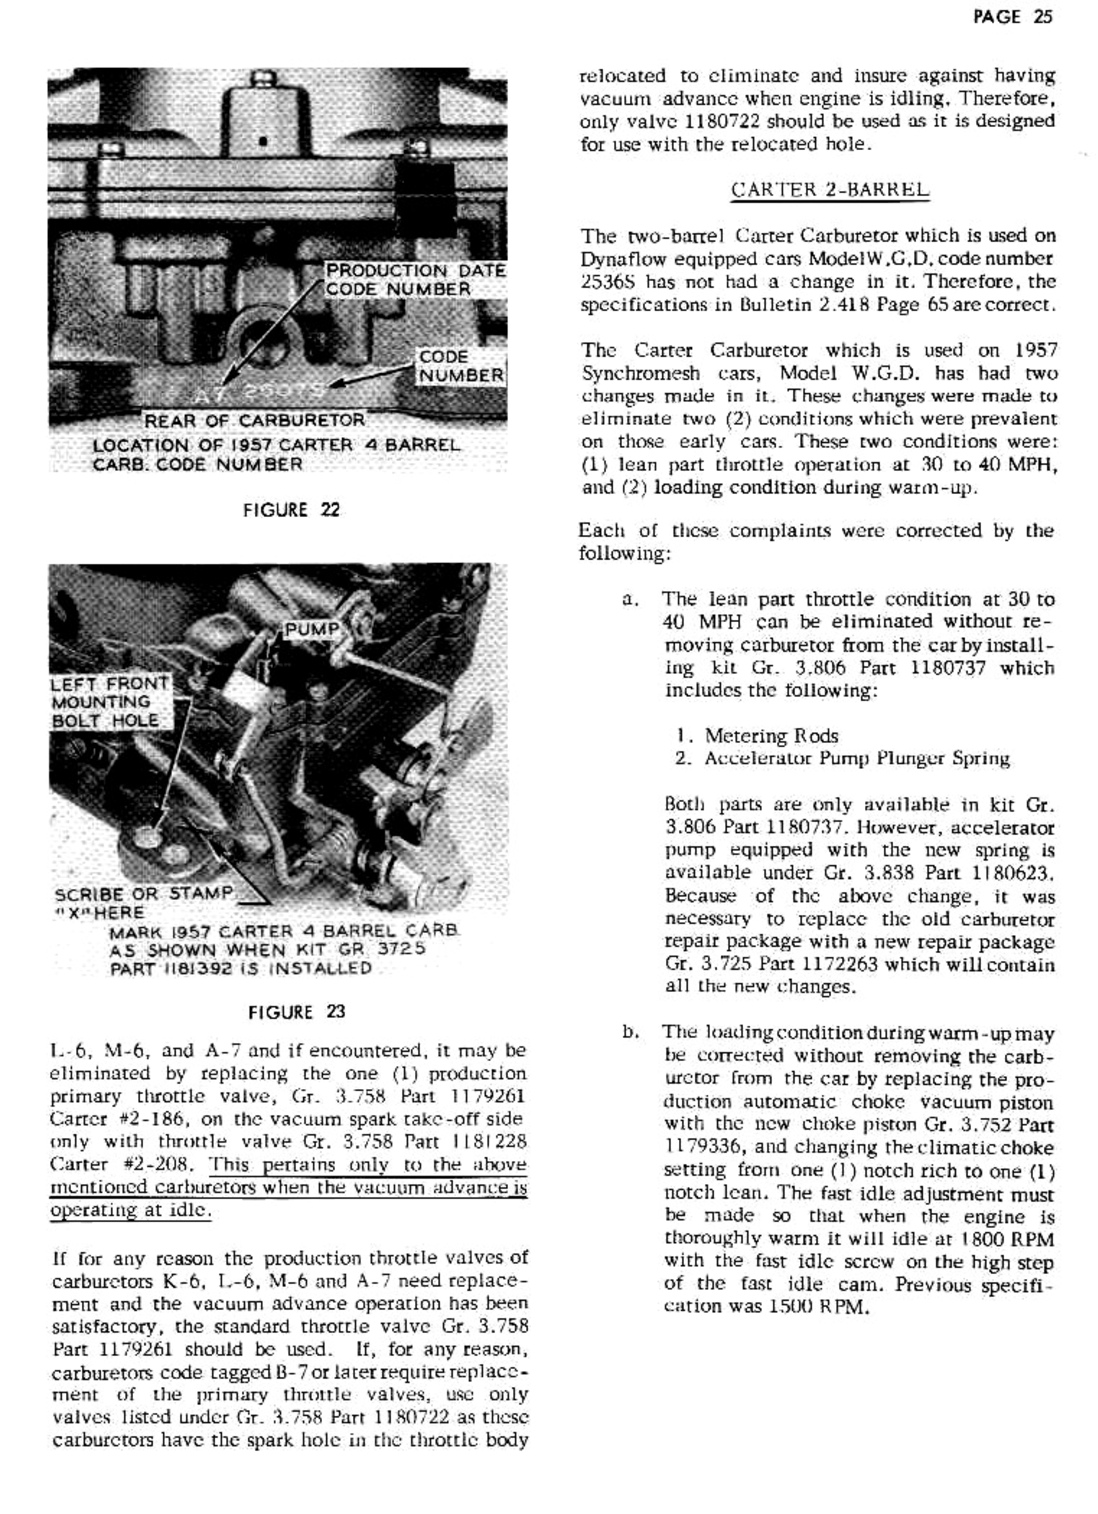 n_1957 Buick Product Service  Bulletins-031-031.jpg